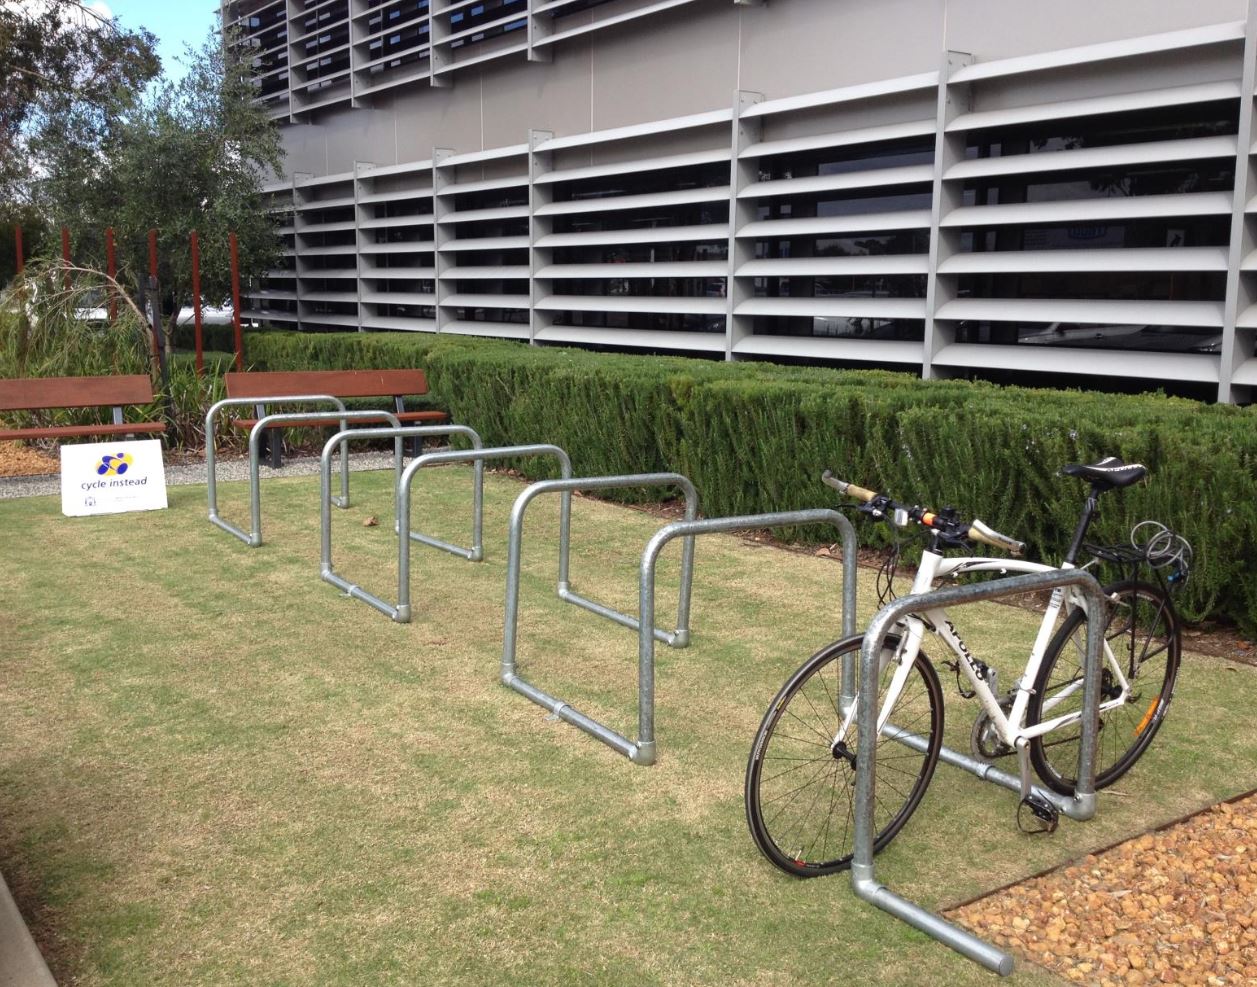 Event Bicycle Parking Racks